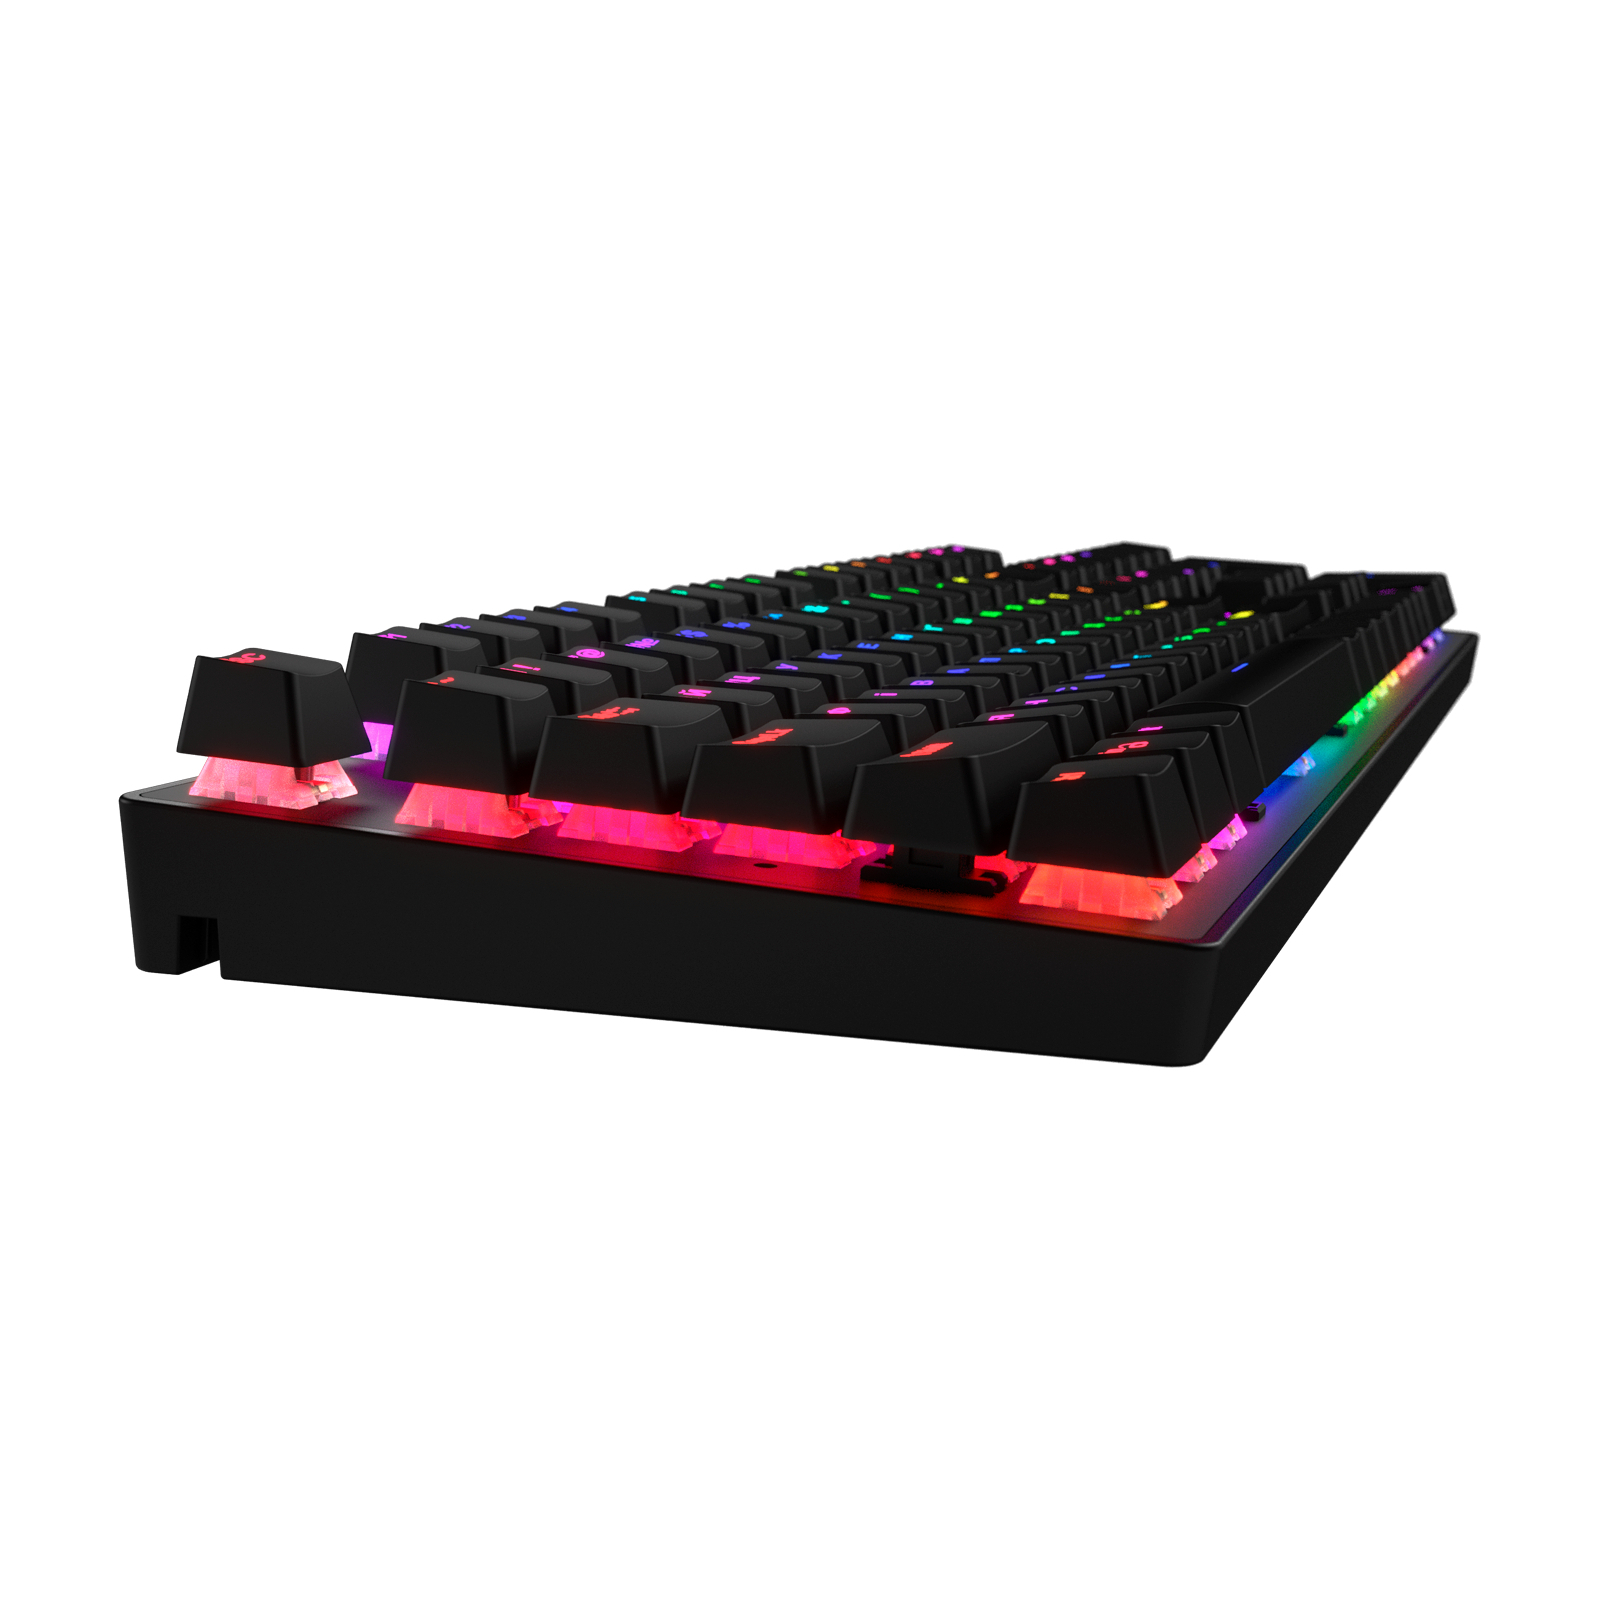 Клавиатура Hator Starfall RGB Pink switch Black (HTK-599) изображение 3